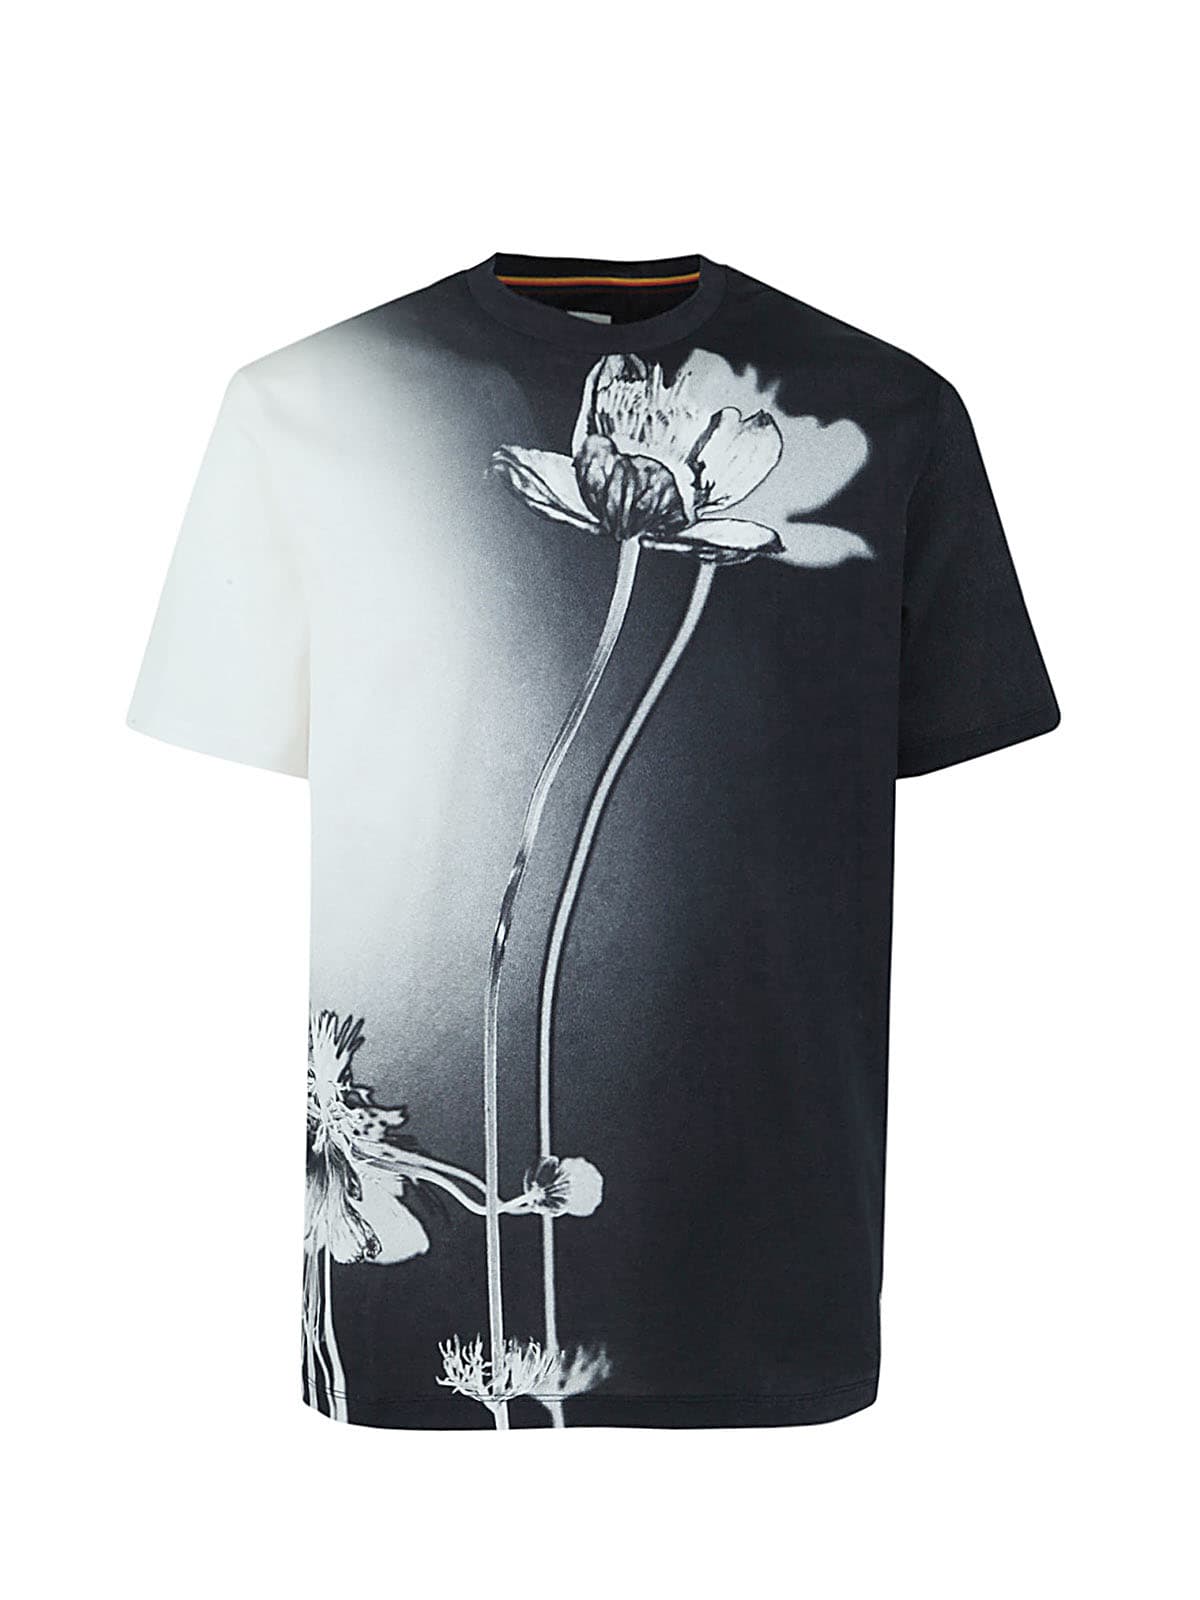 Paul Smith Gents Tshirt Floral Stem